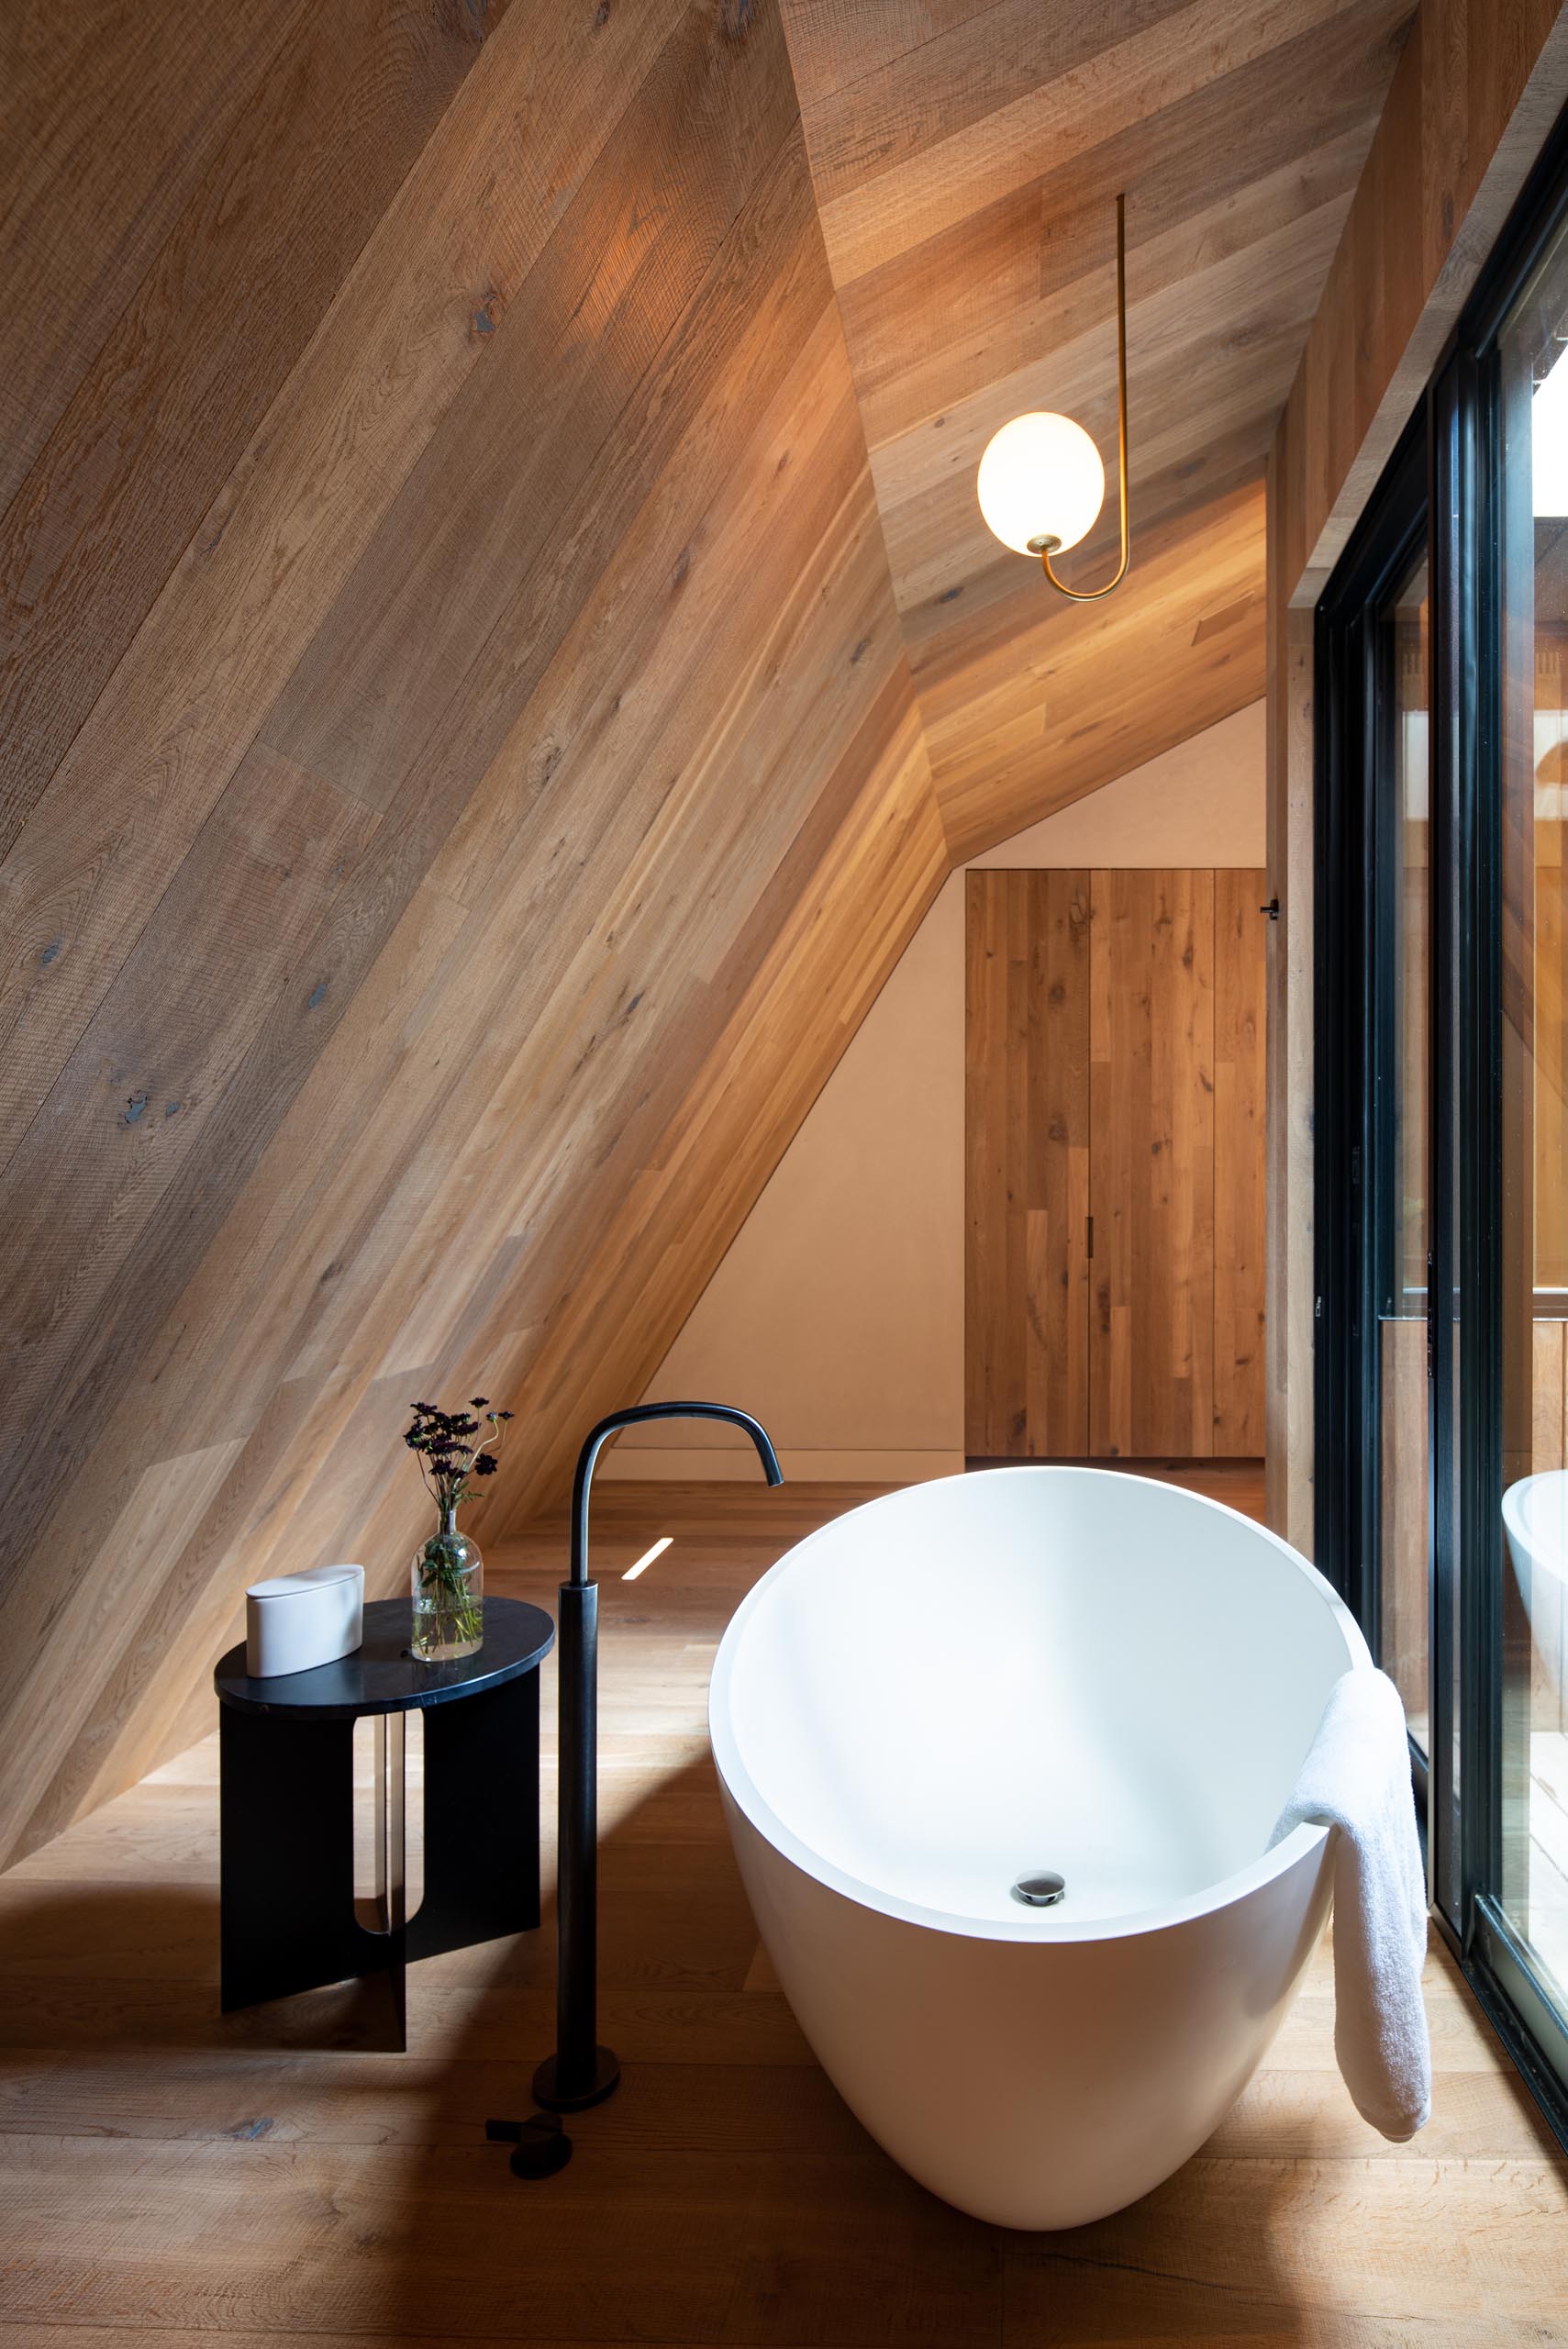 A modern wood lined bathroom with a freestanding bathtub.